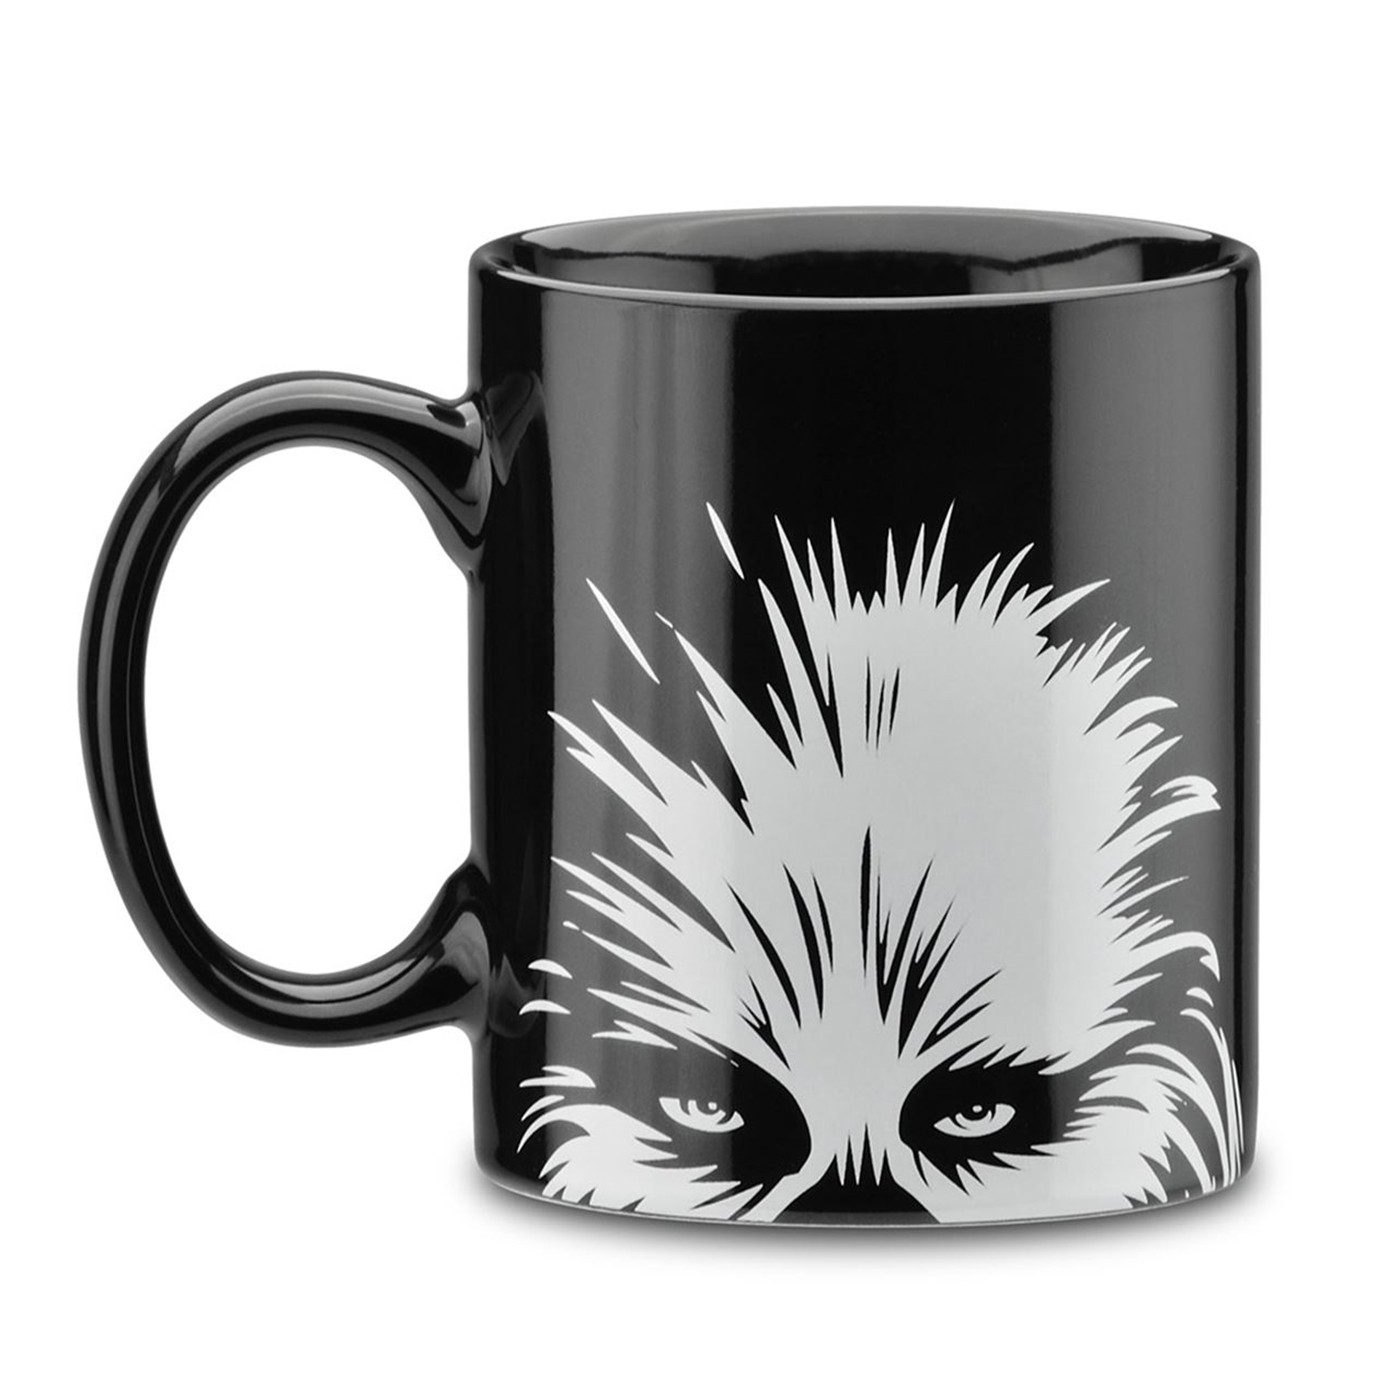 Star Wars Chewie 1-Cup Coffee Maker with Mug